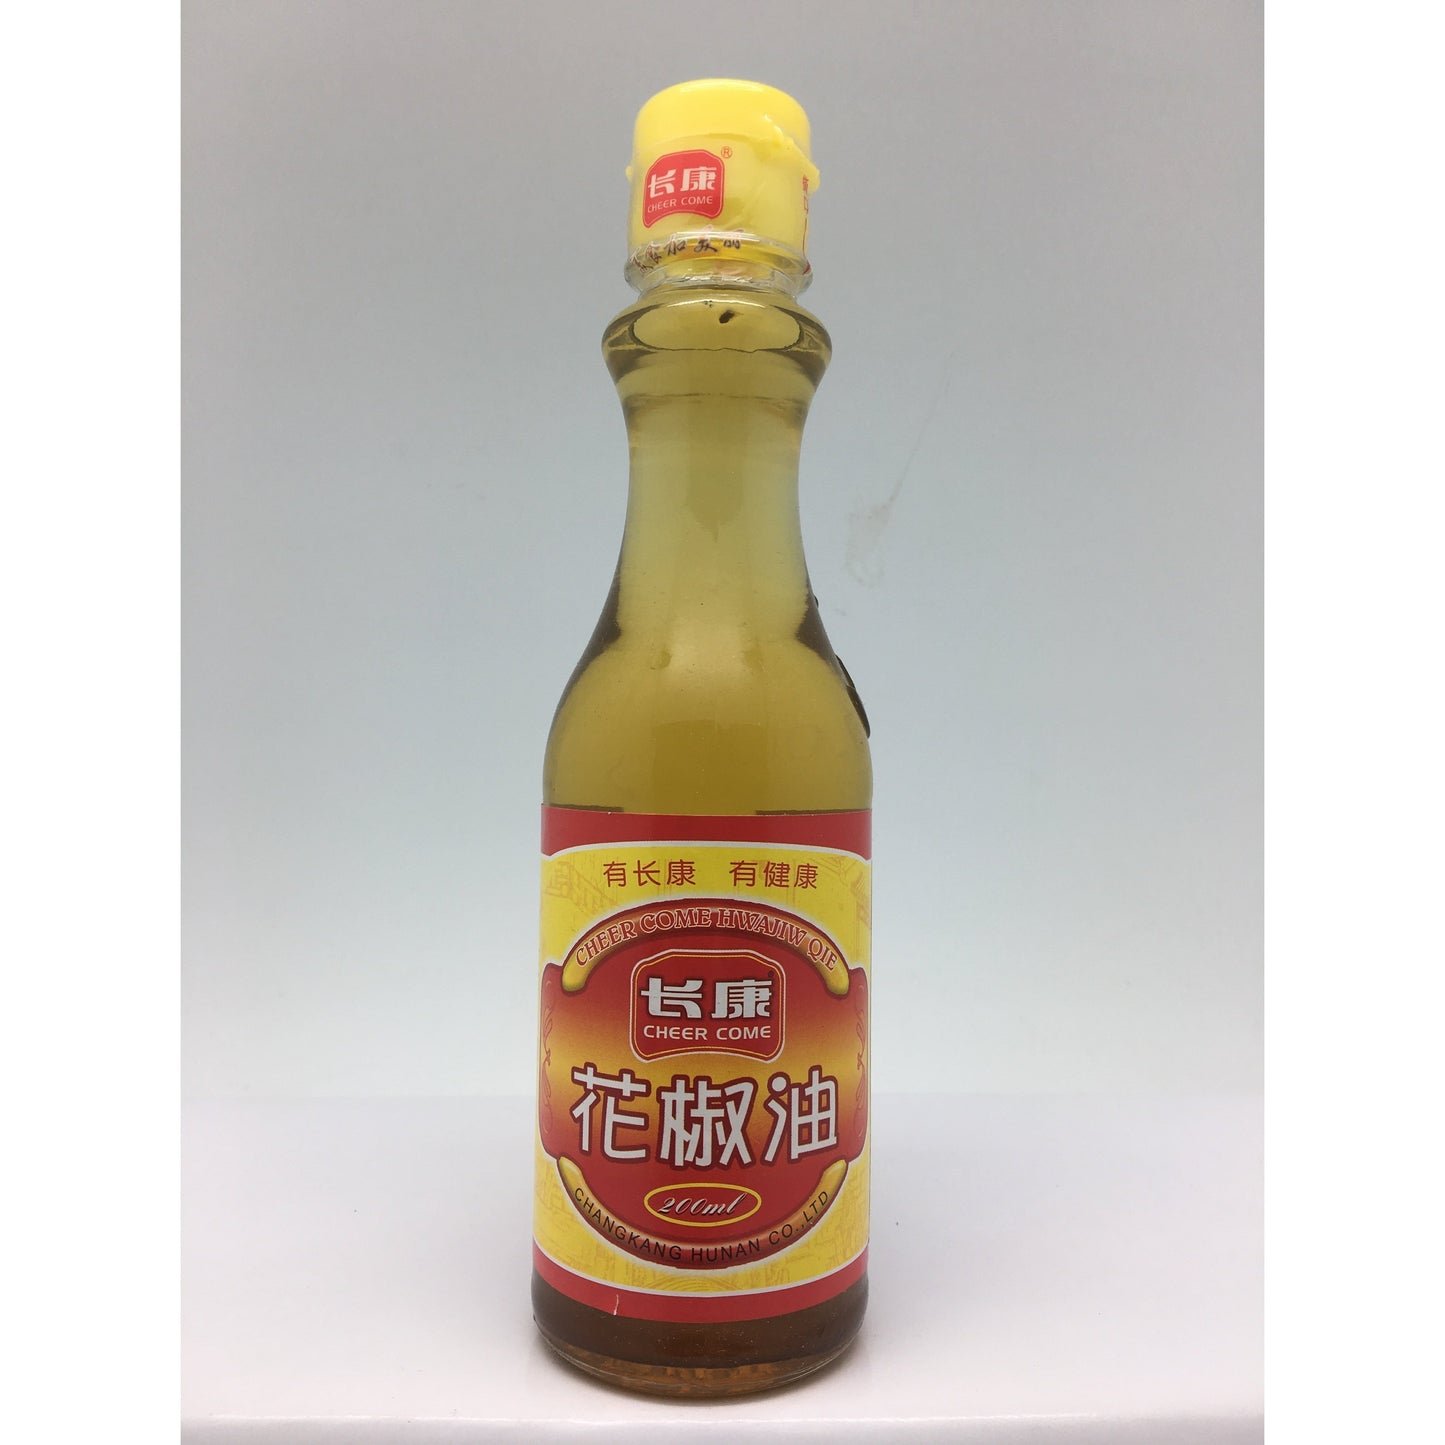 S082P Cheer Come Brand - Pepper Oil 200ml - 20 bot / 1CTN - New Eastland Pty Ltd - Asian food wholesalers